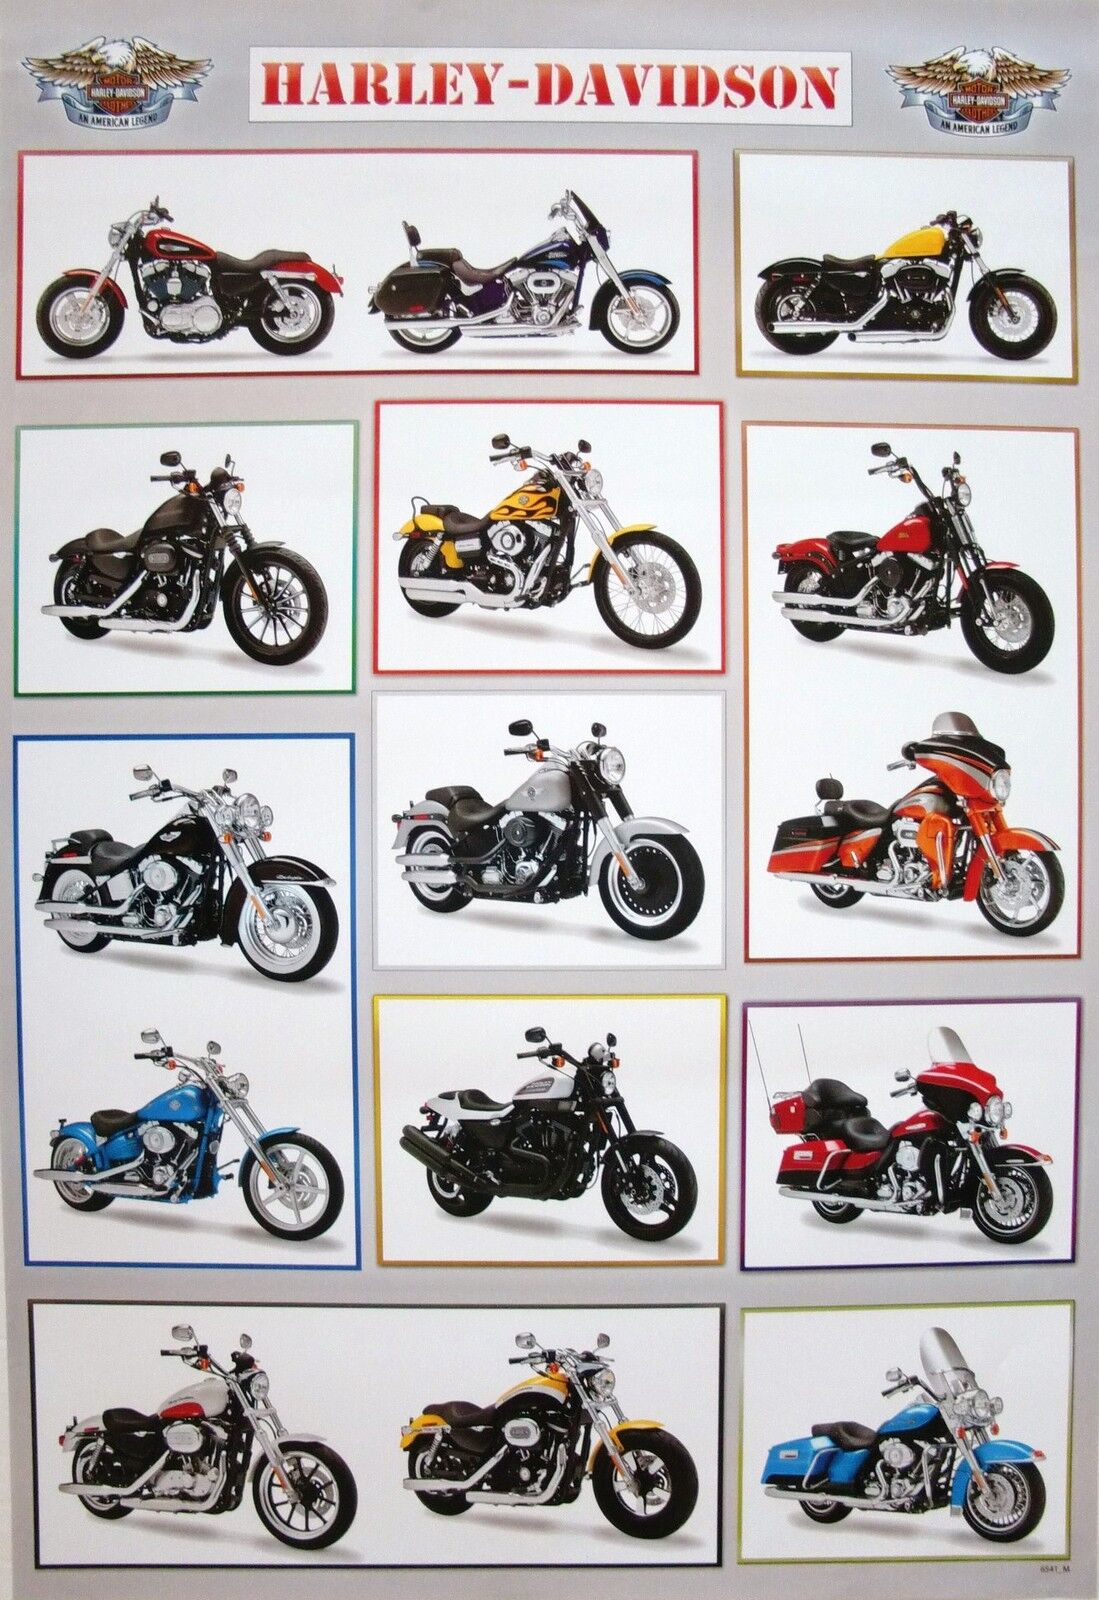 HARLEY DAVIDSON MOTORCYCLE POSTER: 15 CLASSIC, BEAUTIFUL, BIG BIKES